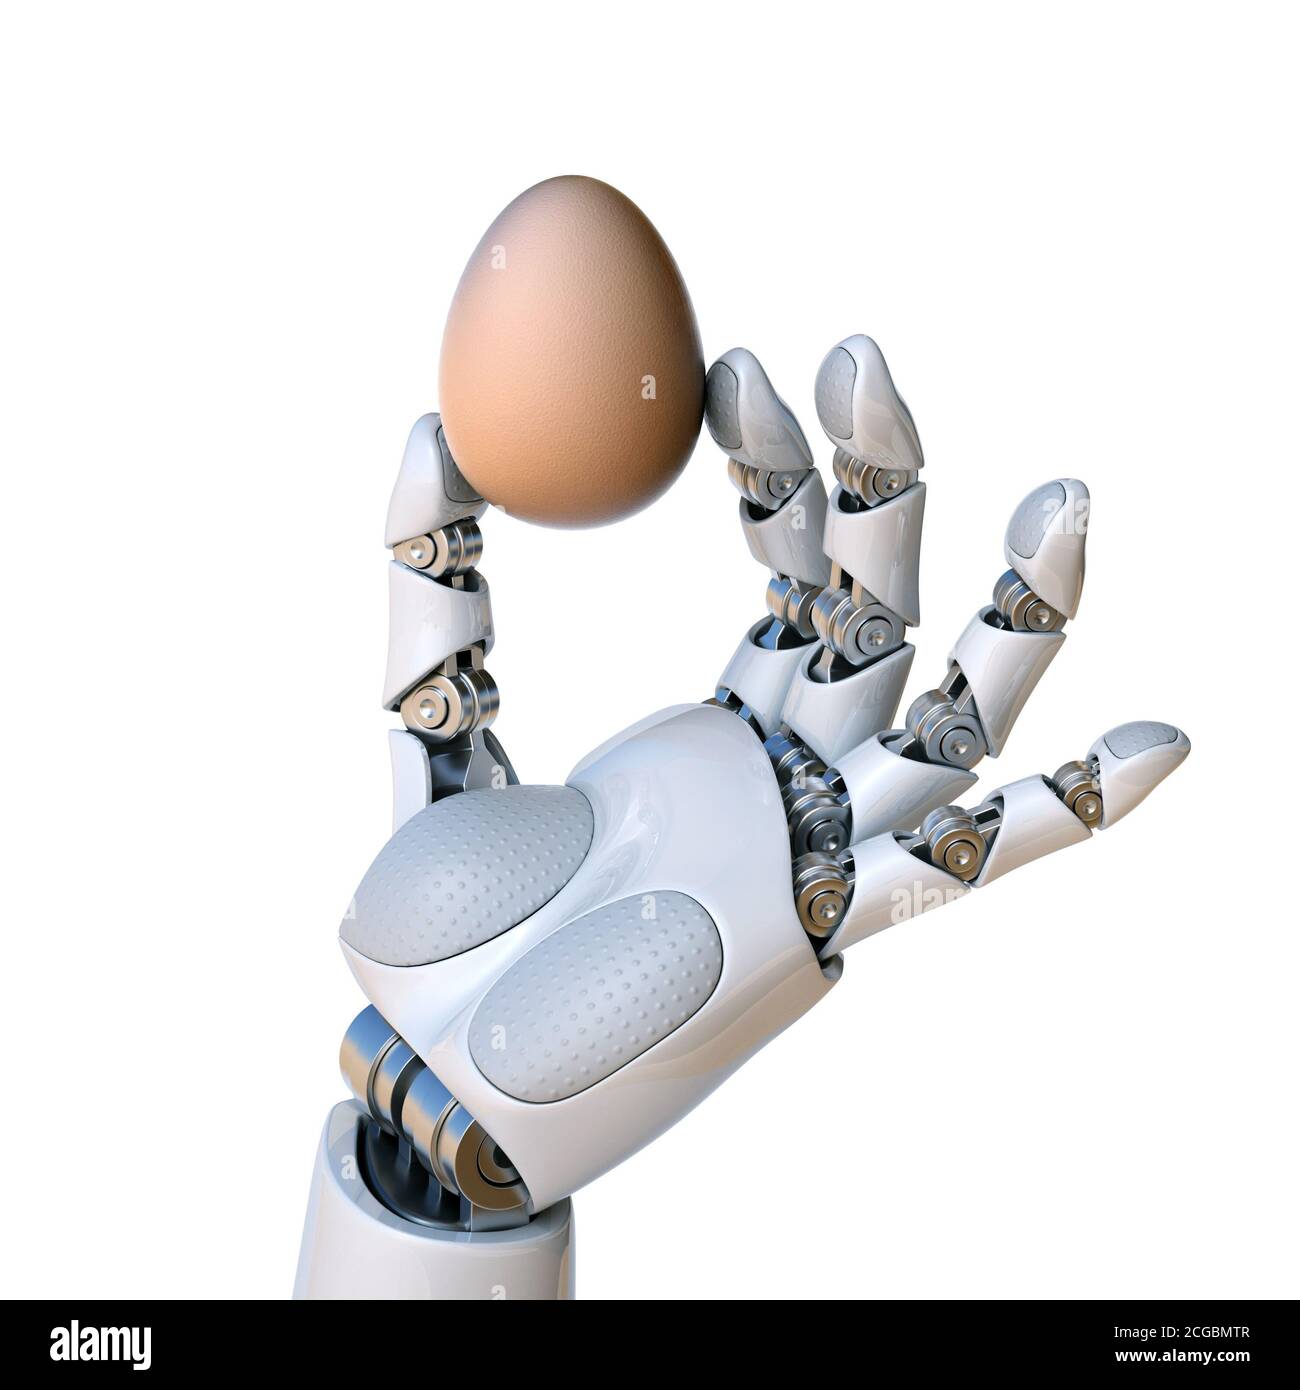 Robot hand holding the egg 3d rendering Stock Photo